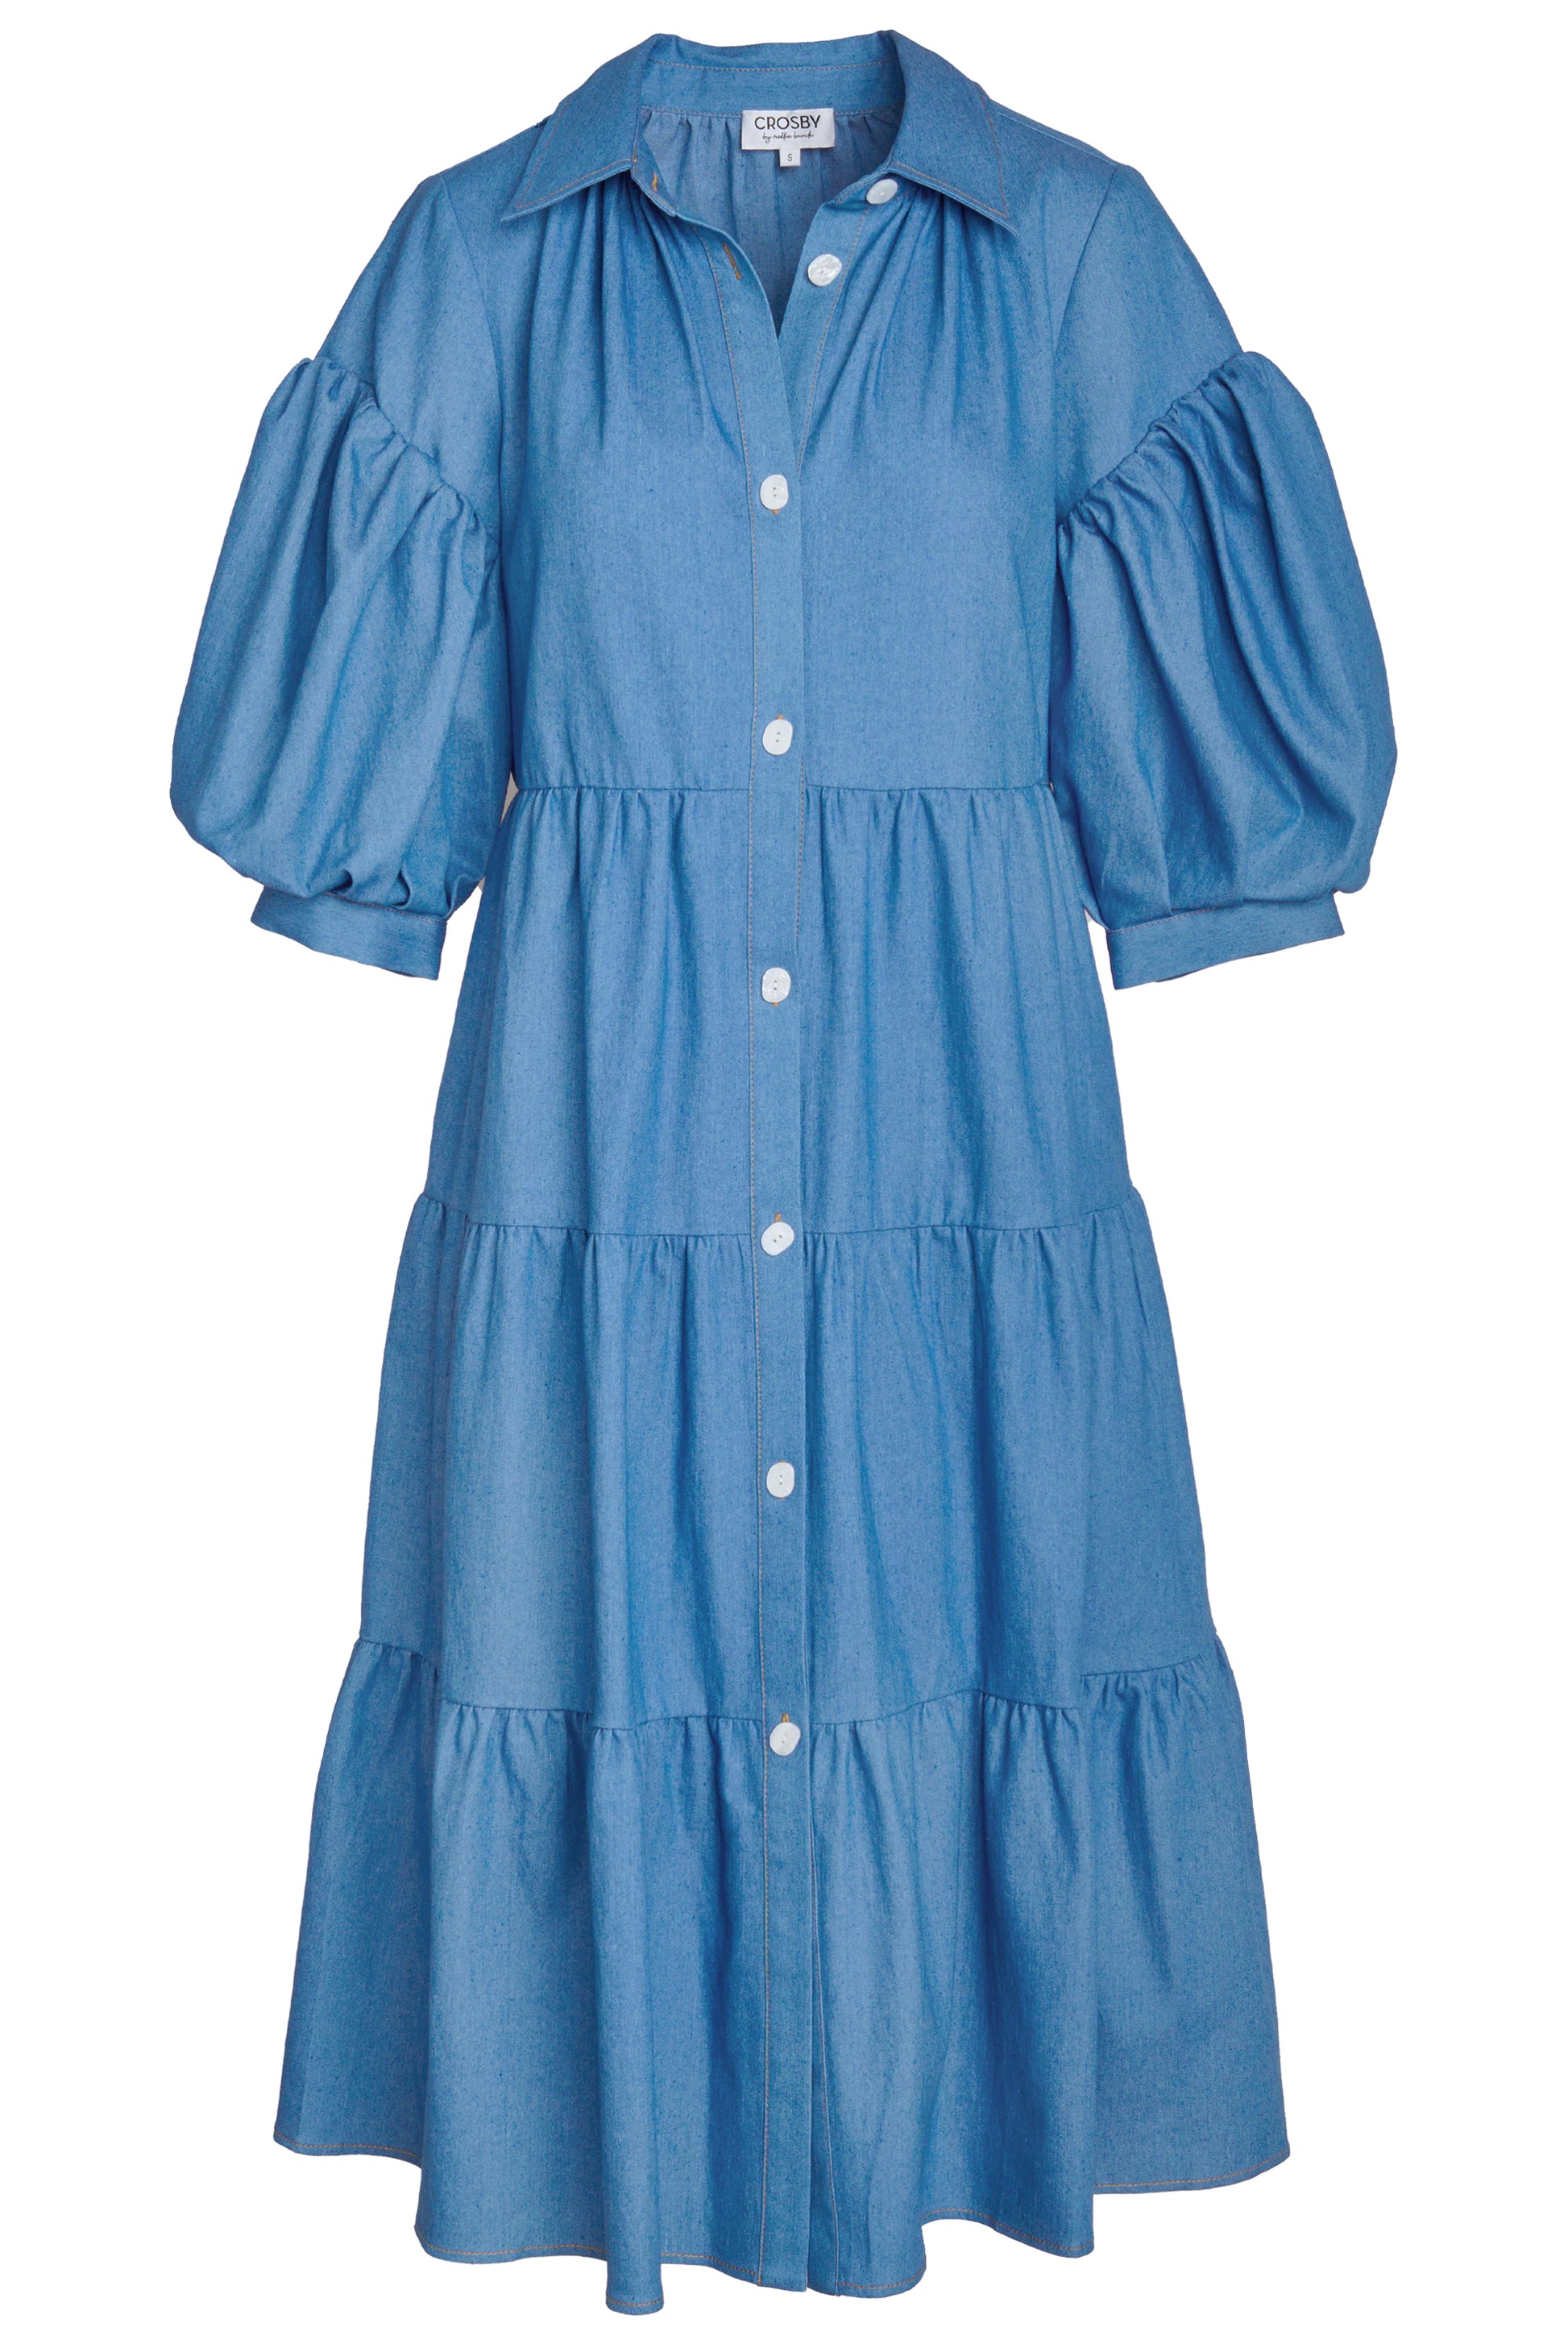 Rowen Dress in Denim Blue | CROSBY by Mollie Burch